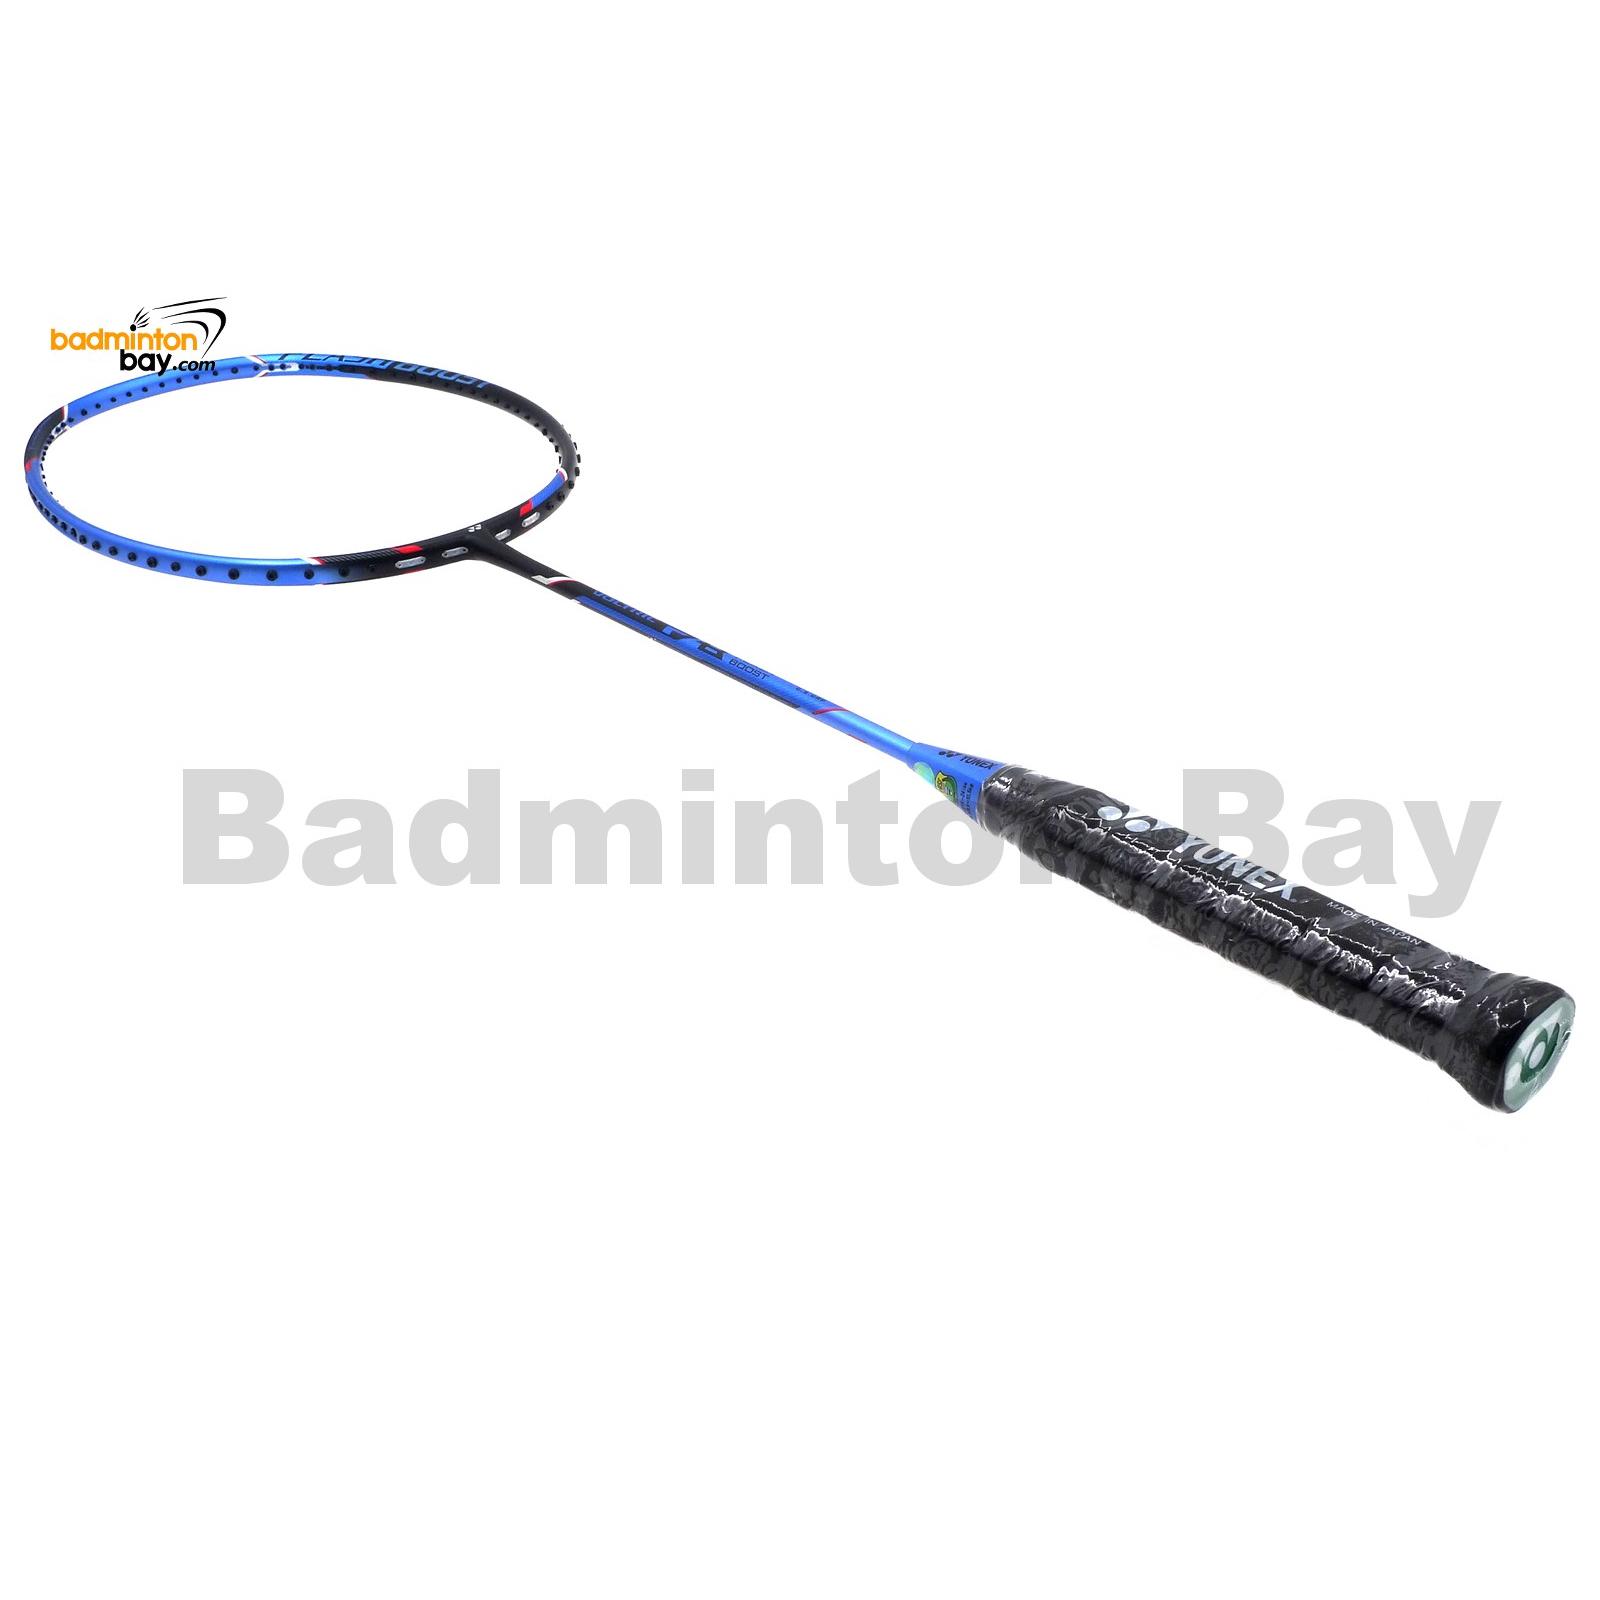 Yonex Voltric Flash Boost Badminton Racquet Black/Blue